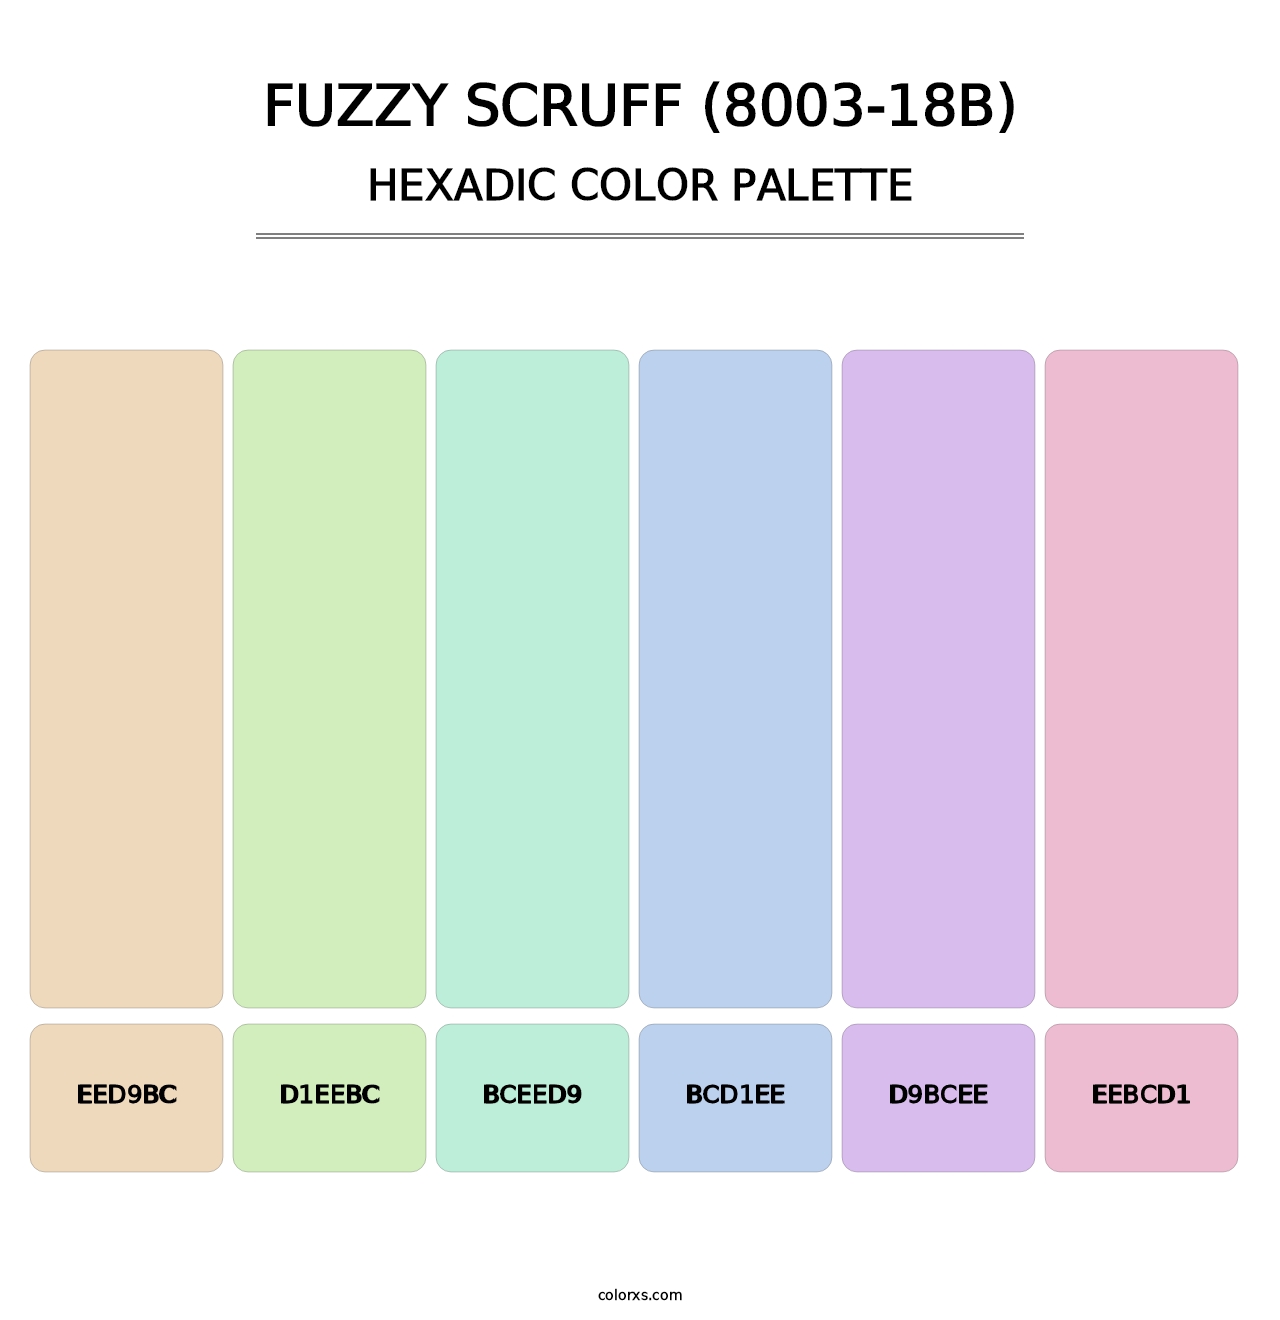 Fuzzy Scruff (8003-18B) - Hexadic Color Palette